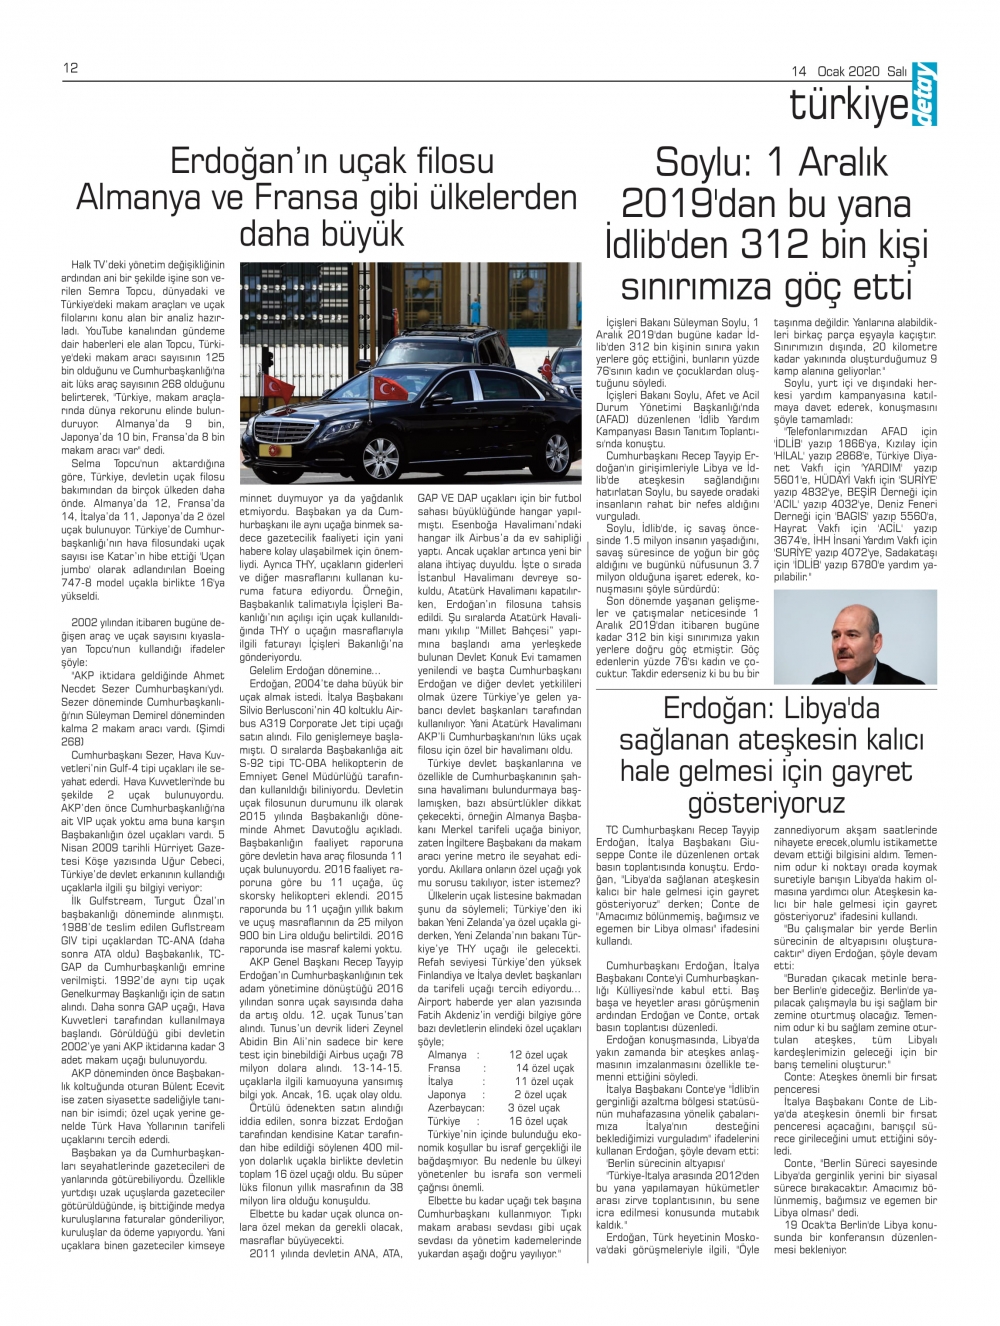 Detay Gazetes 14 Ocak 2020 galerisi resim 11